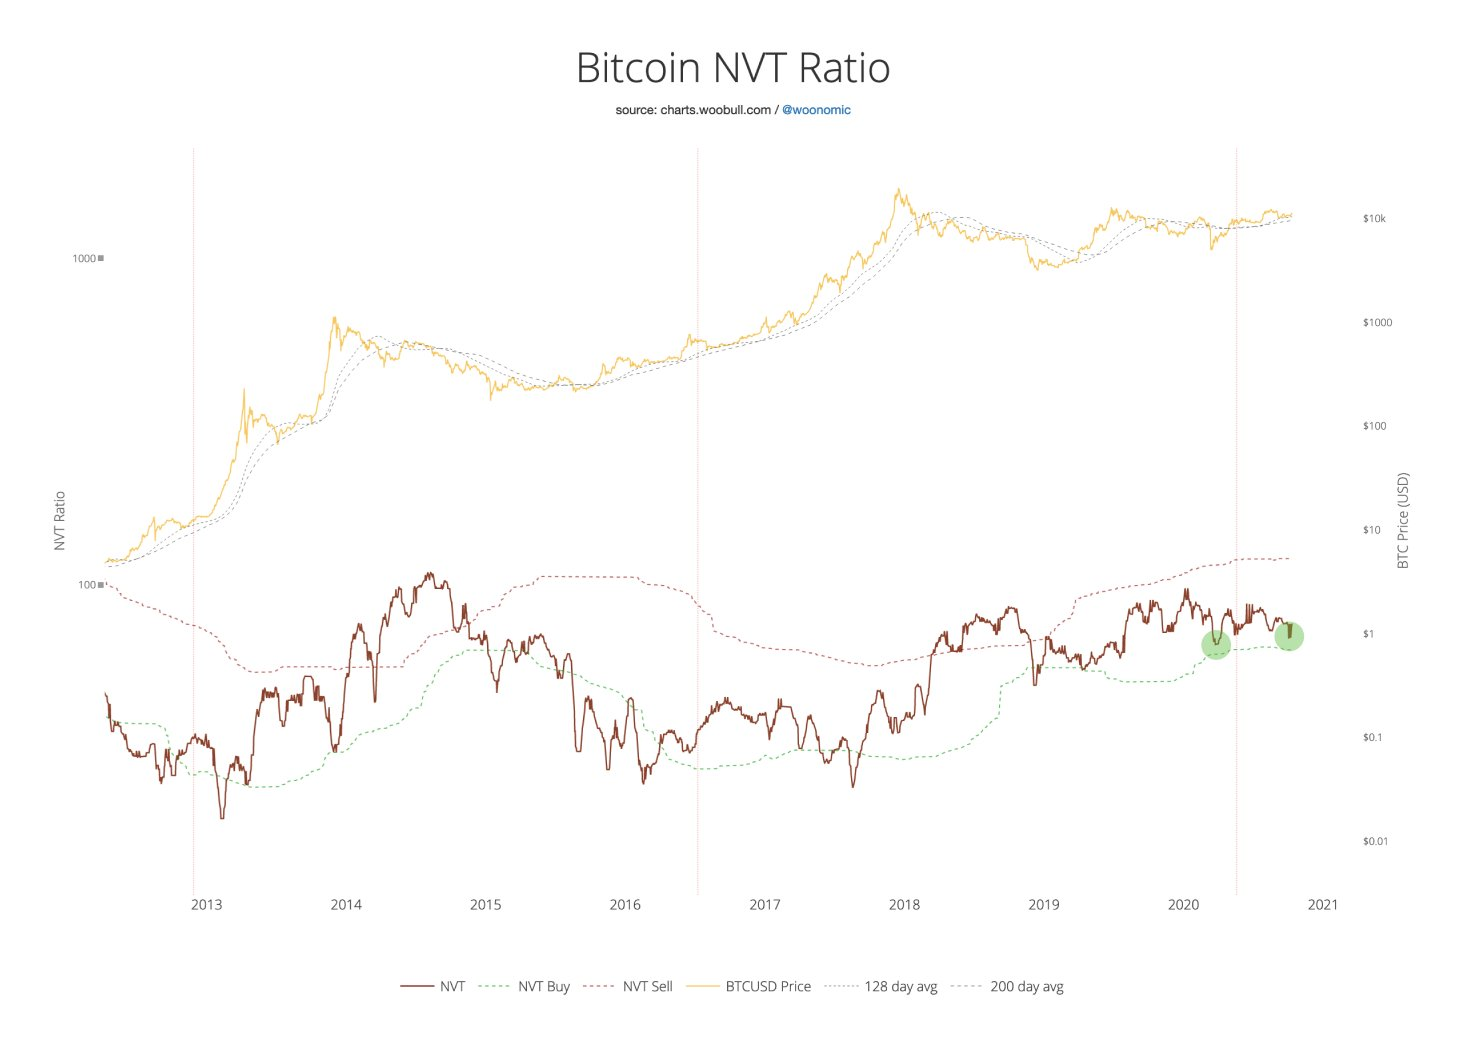 Bitcoin NVT (Transaction volume vs price)